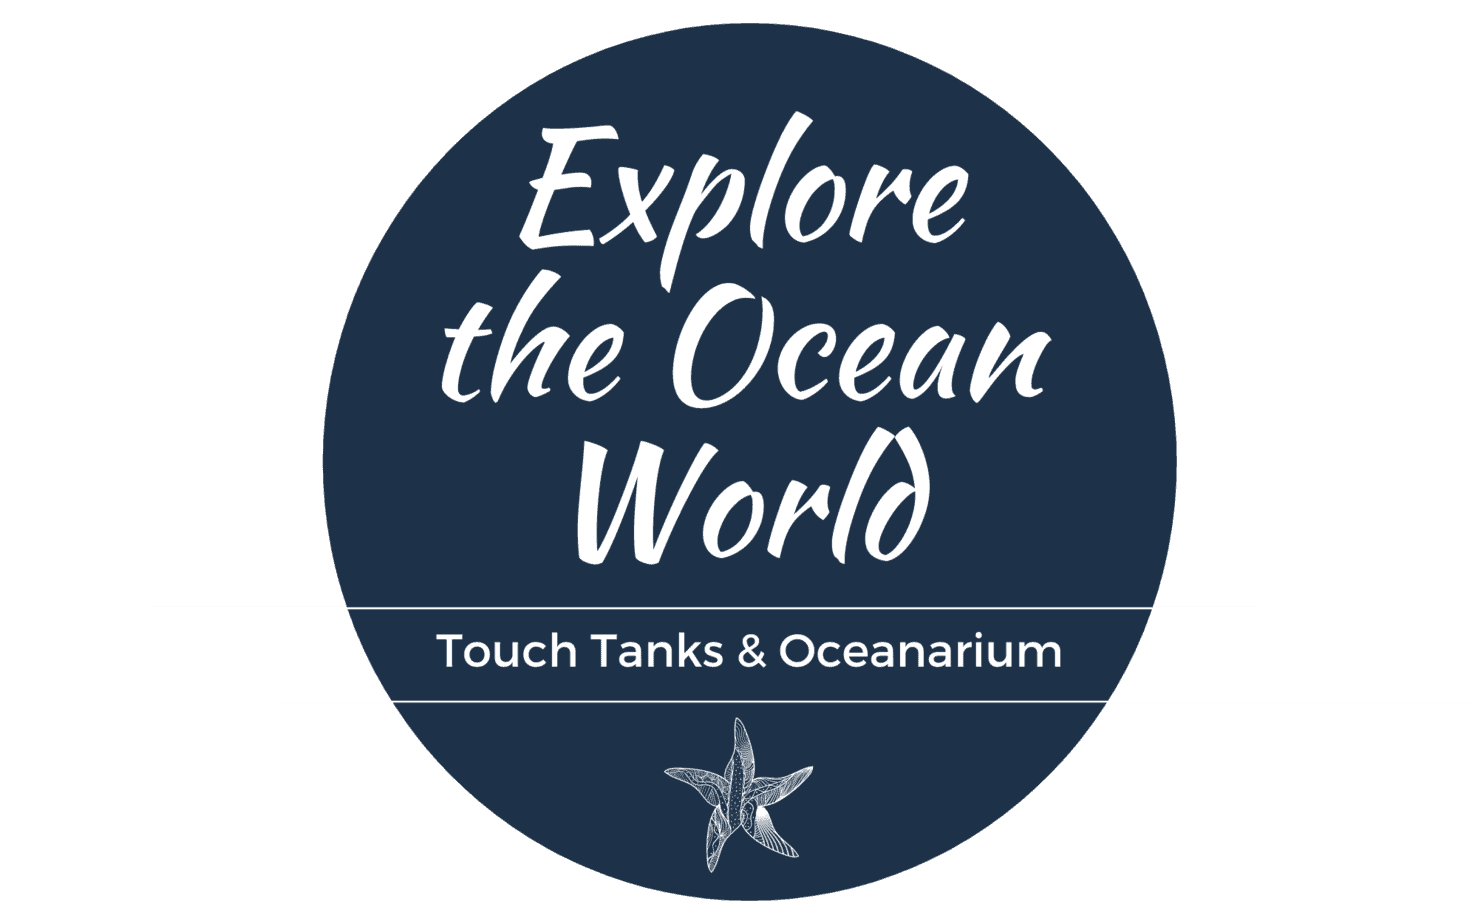 Explore the Ocean World! A Hands-on Marine Experience on the Beach